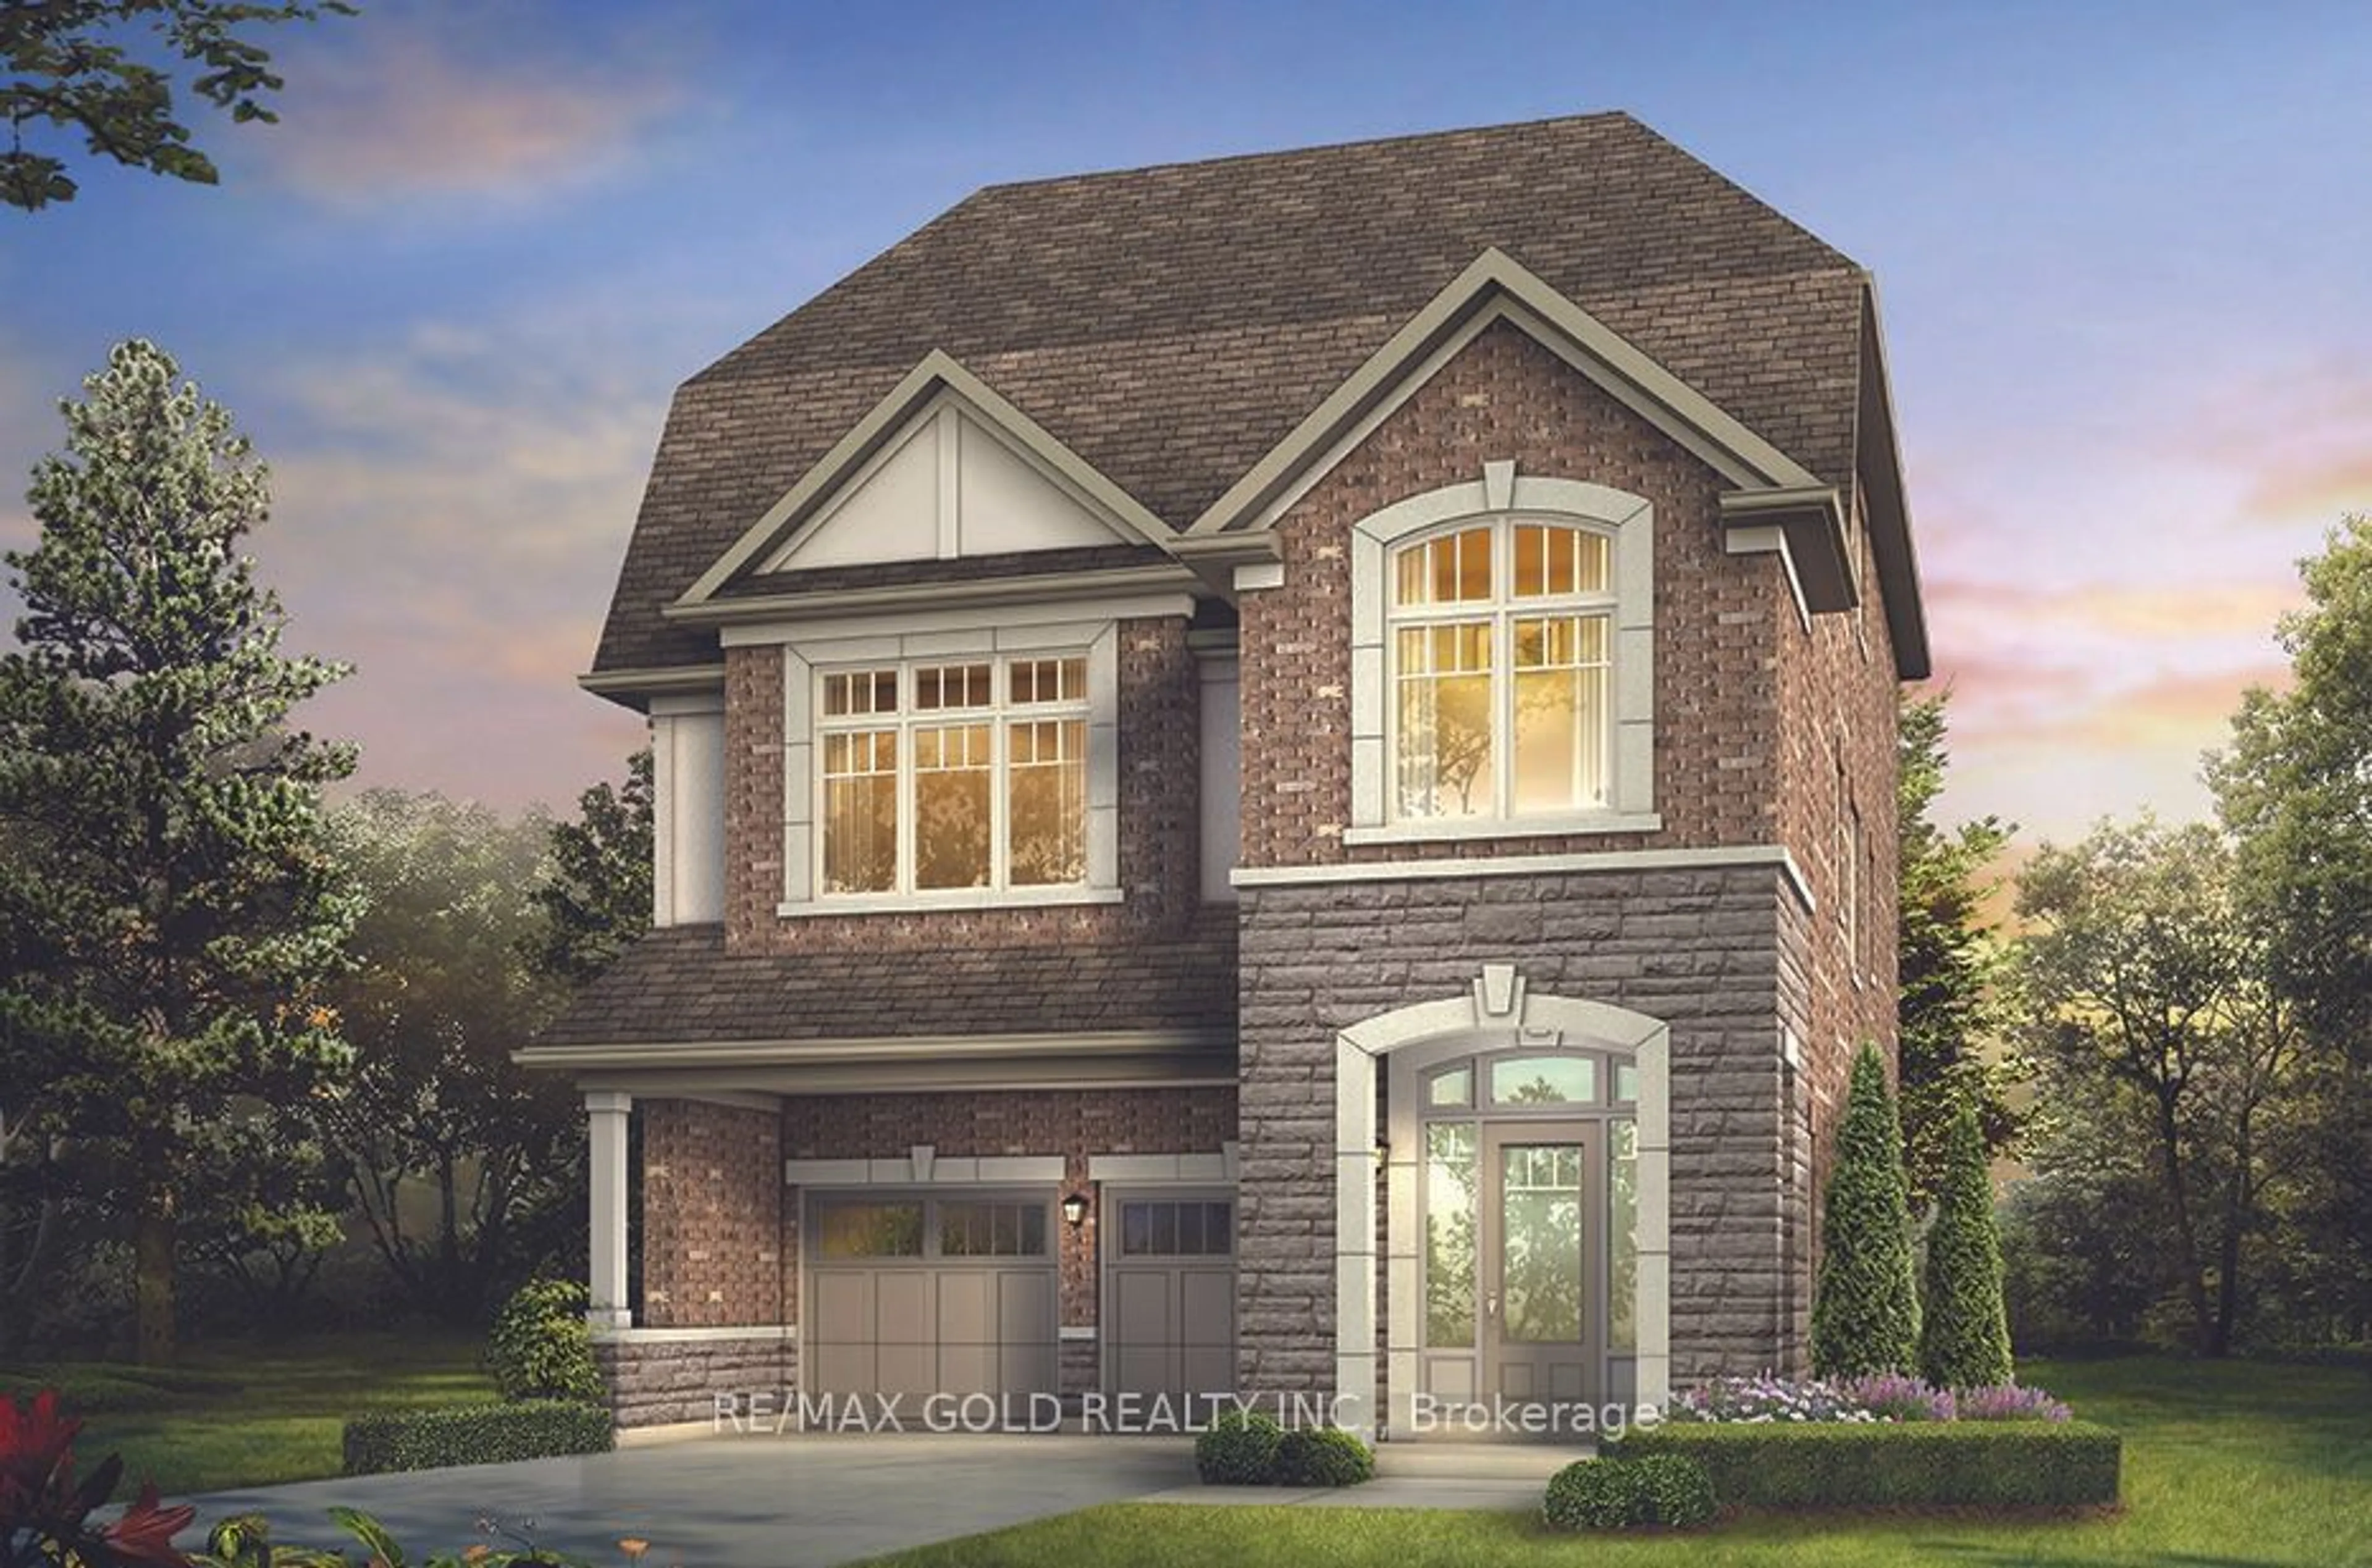 Home with brick exterior material for 3943 Lodi Rd, Burlington Ontario L7M 0Z6